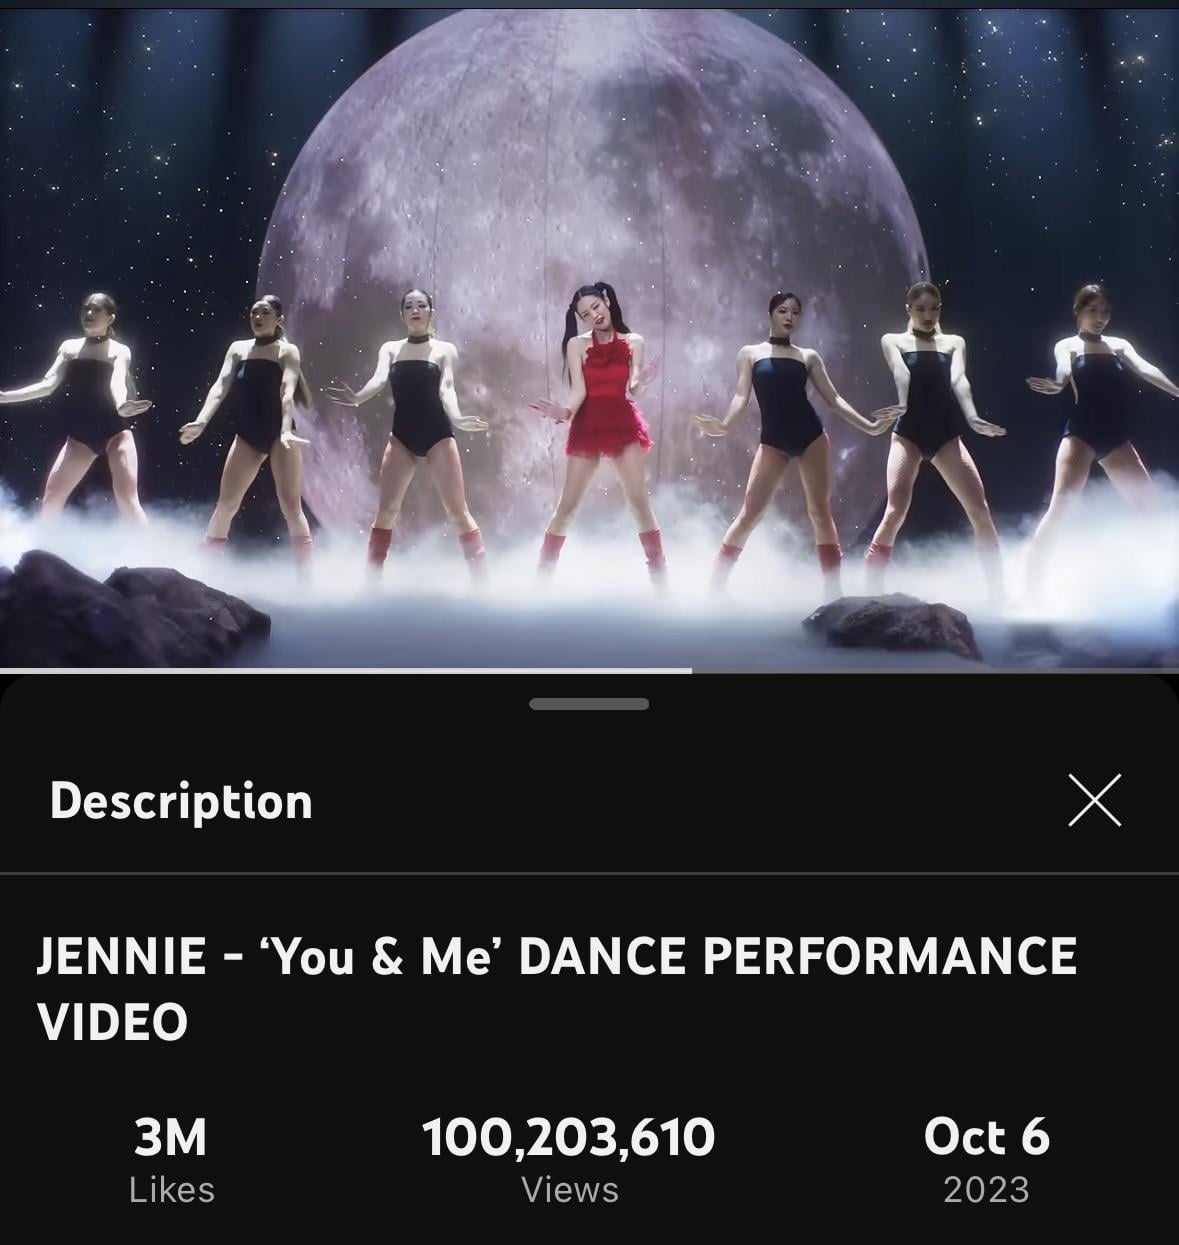 231230 JENNIE - ‘You & Me’ DANCE PERFORMANCE VIDEO hits 100 MILLION VIEWS on Youtube!